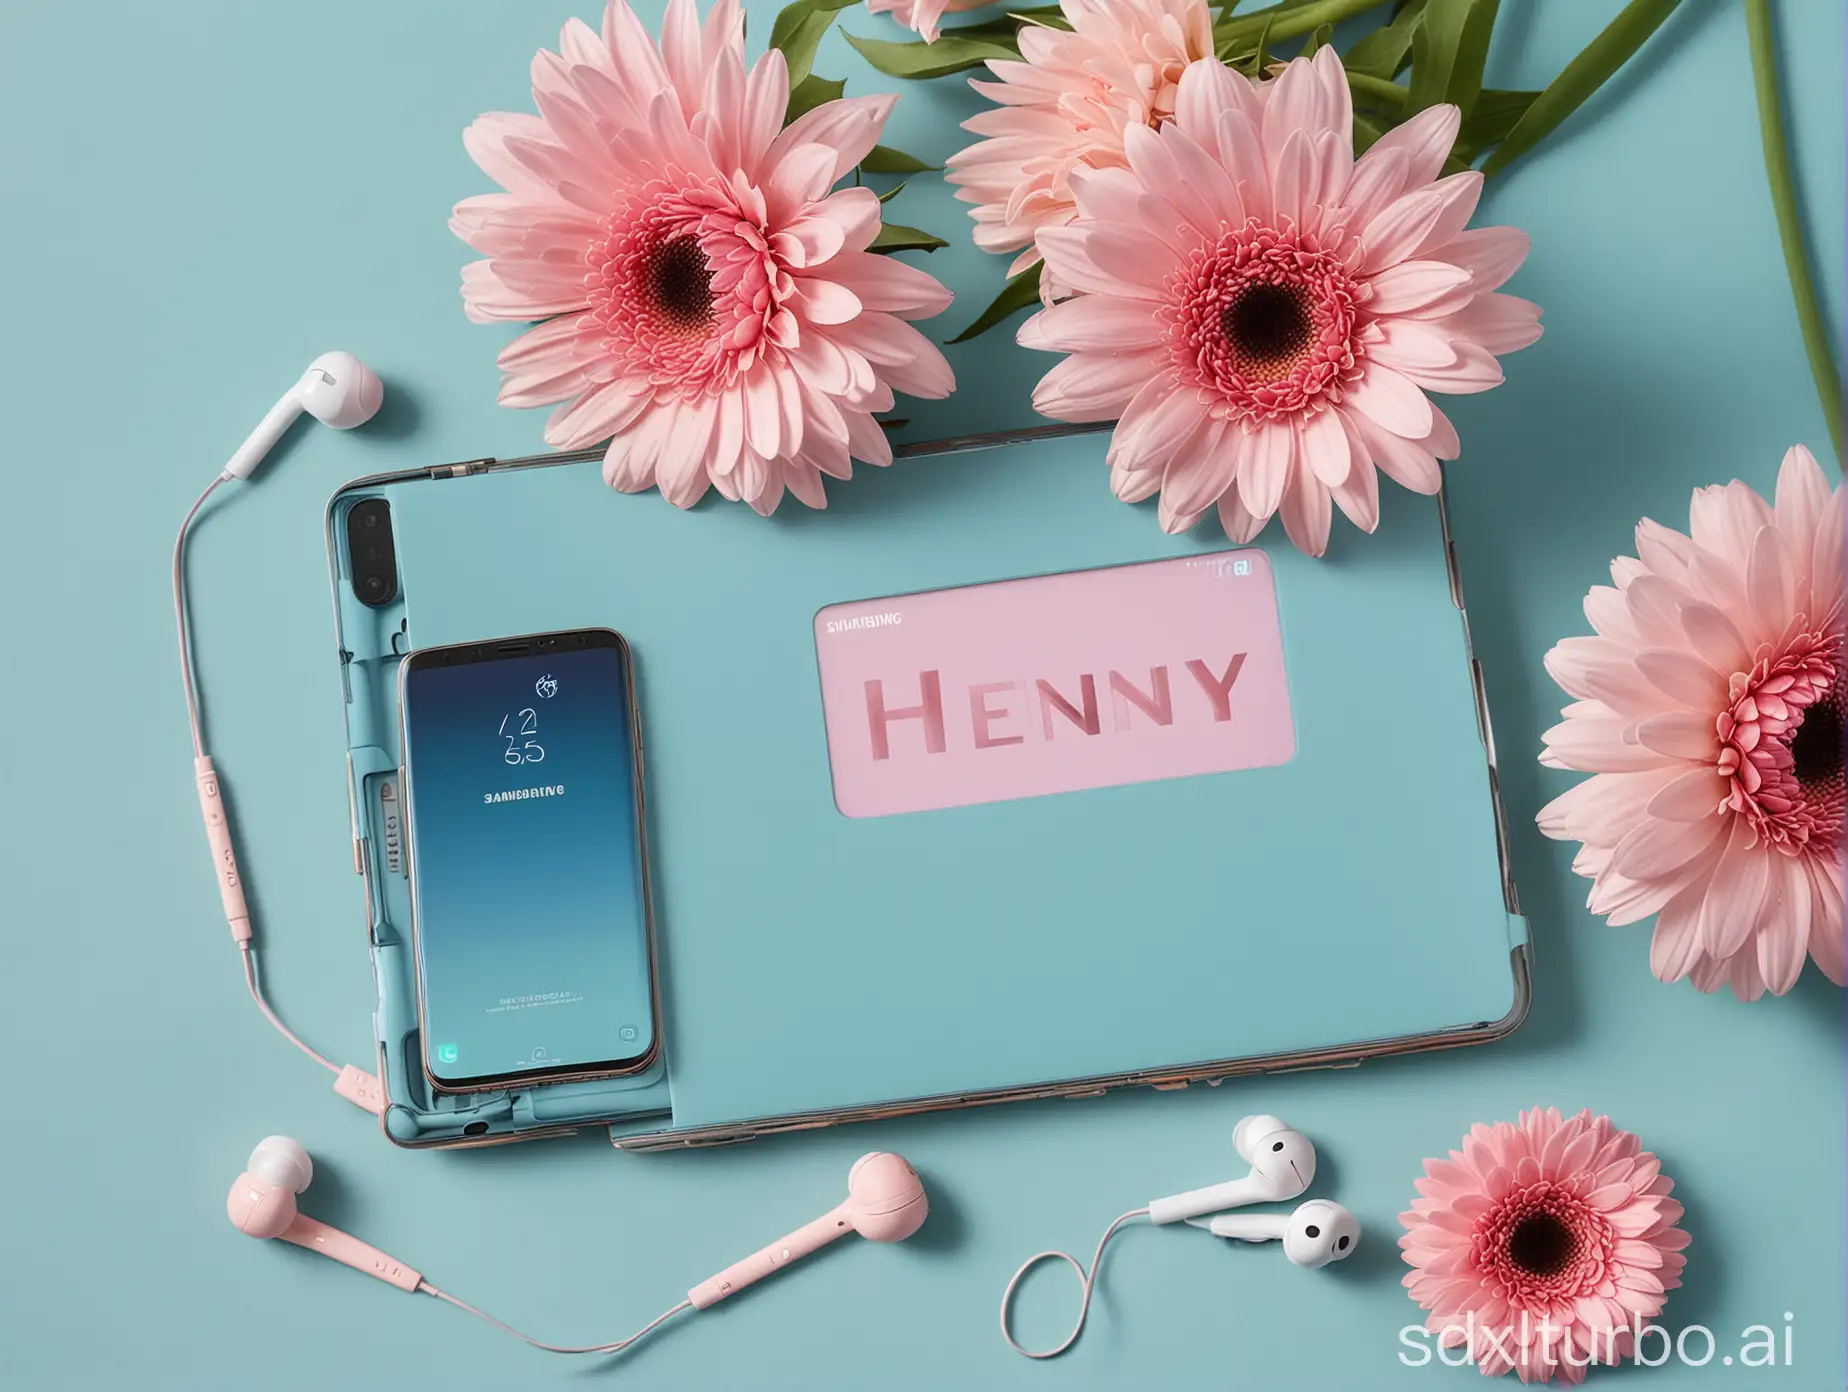 Text Henny on Samsung laptop, Samsung mobile phone, earbuds, palm, light pink gerberas, background blue aquablue